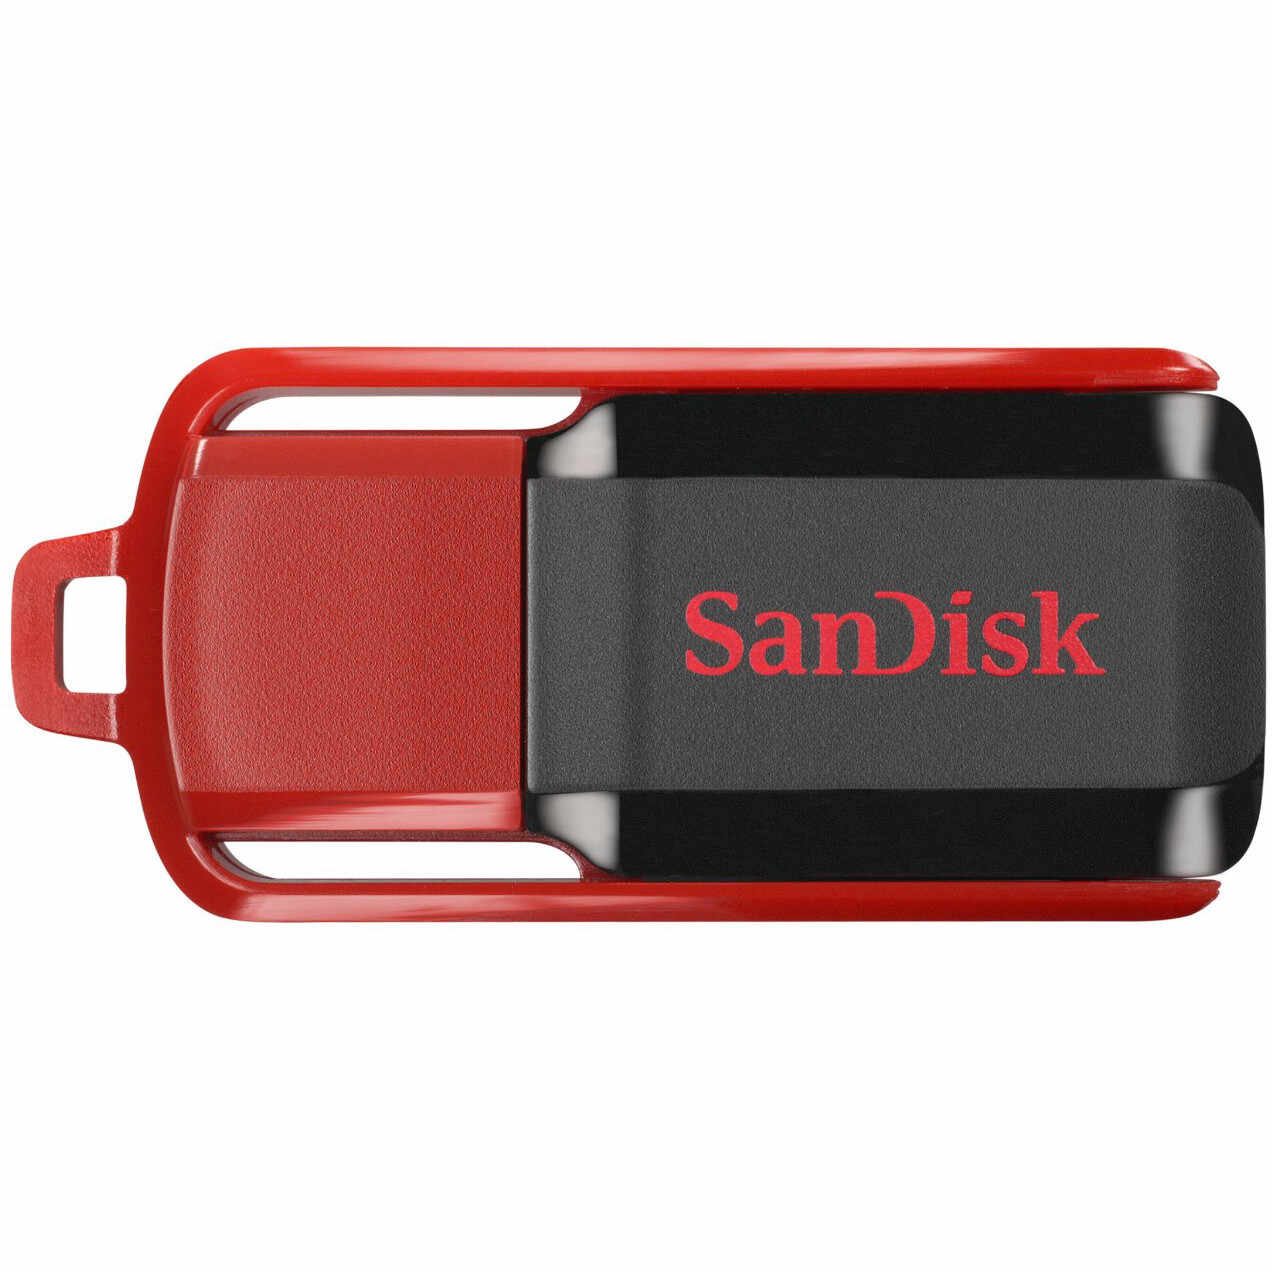 Memorie USB Sandisk, 32 GB, USB 2.0, Rosu/Negru